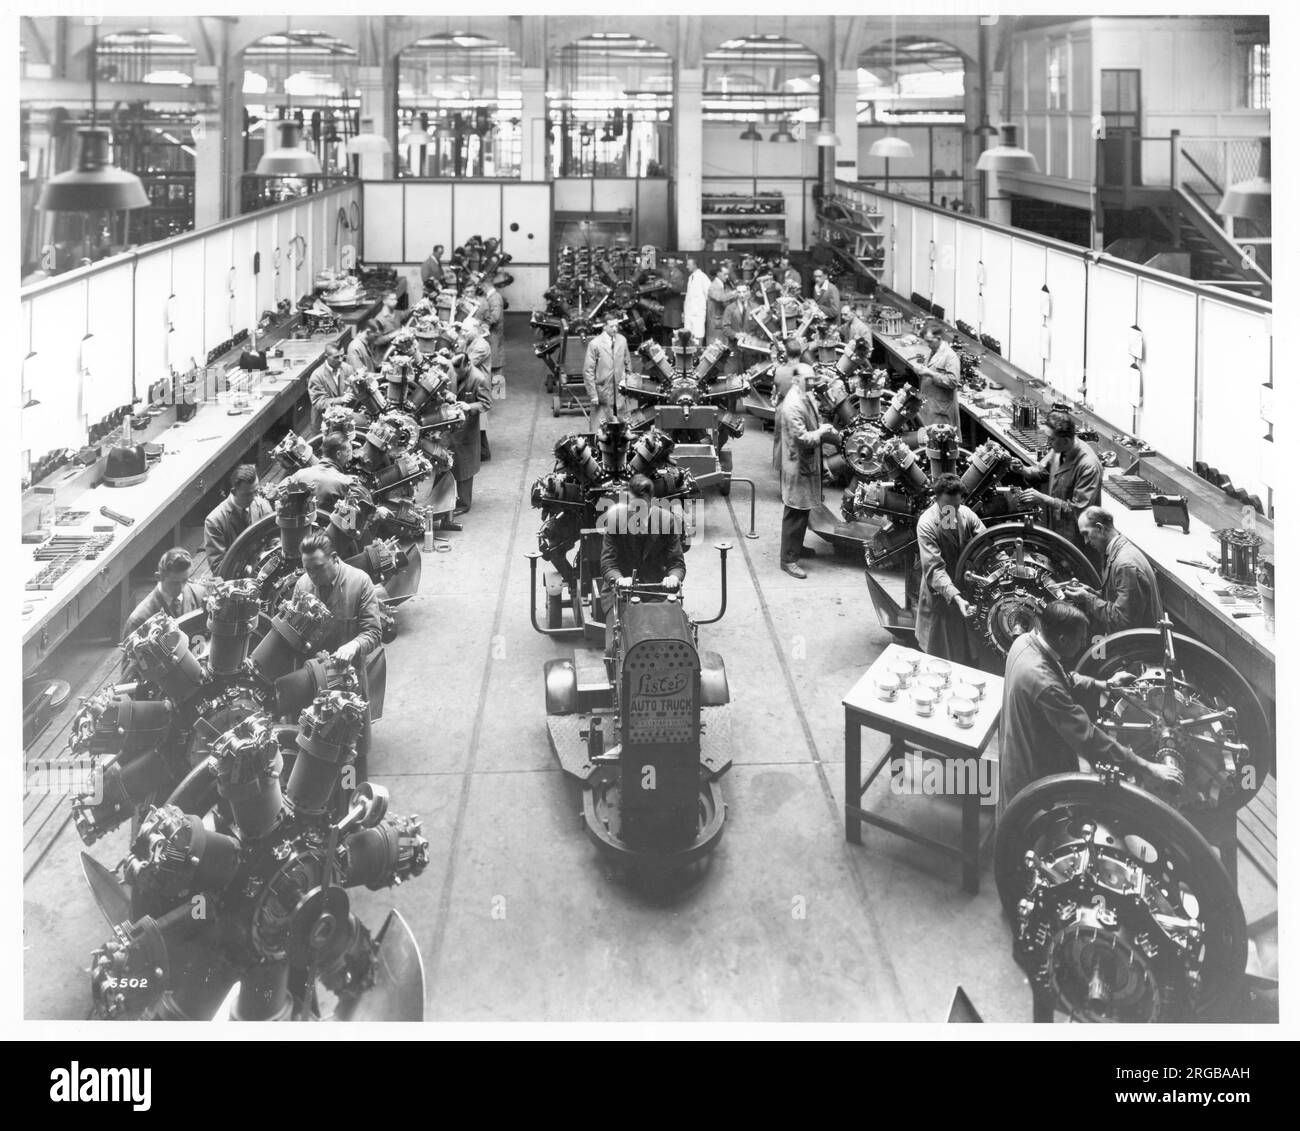 Bristol Airplane Company - Bristol Mercury, moteur radial 9 cylindres, atelier d'assemblage final. Banque D'Images